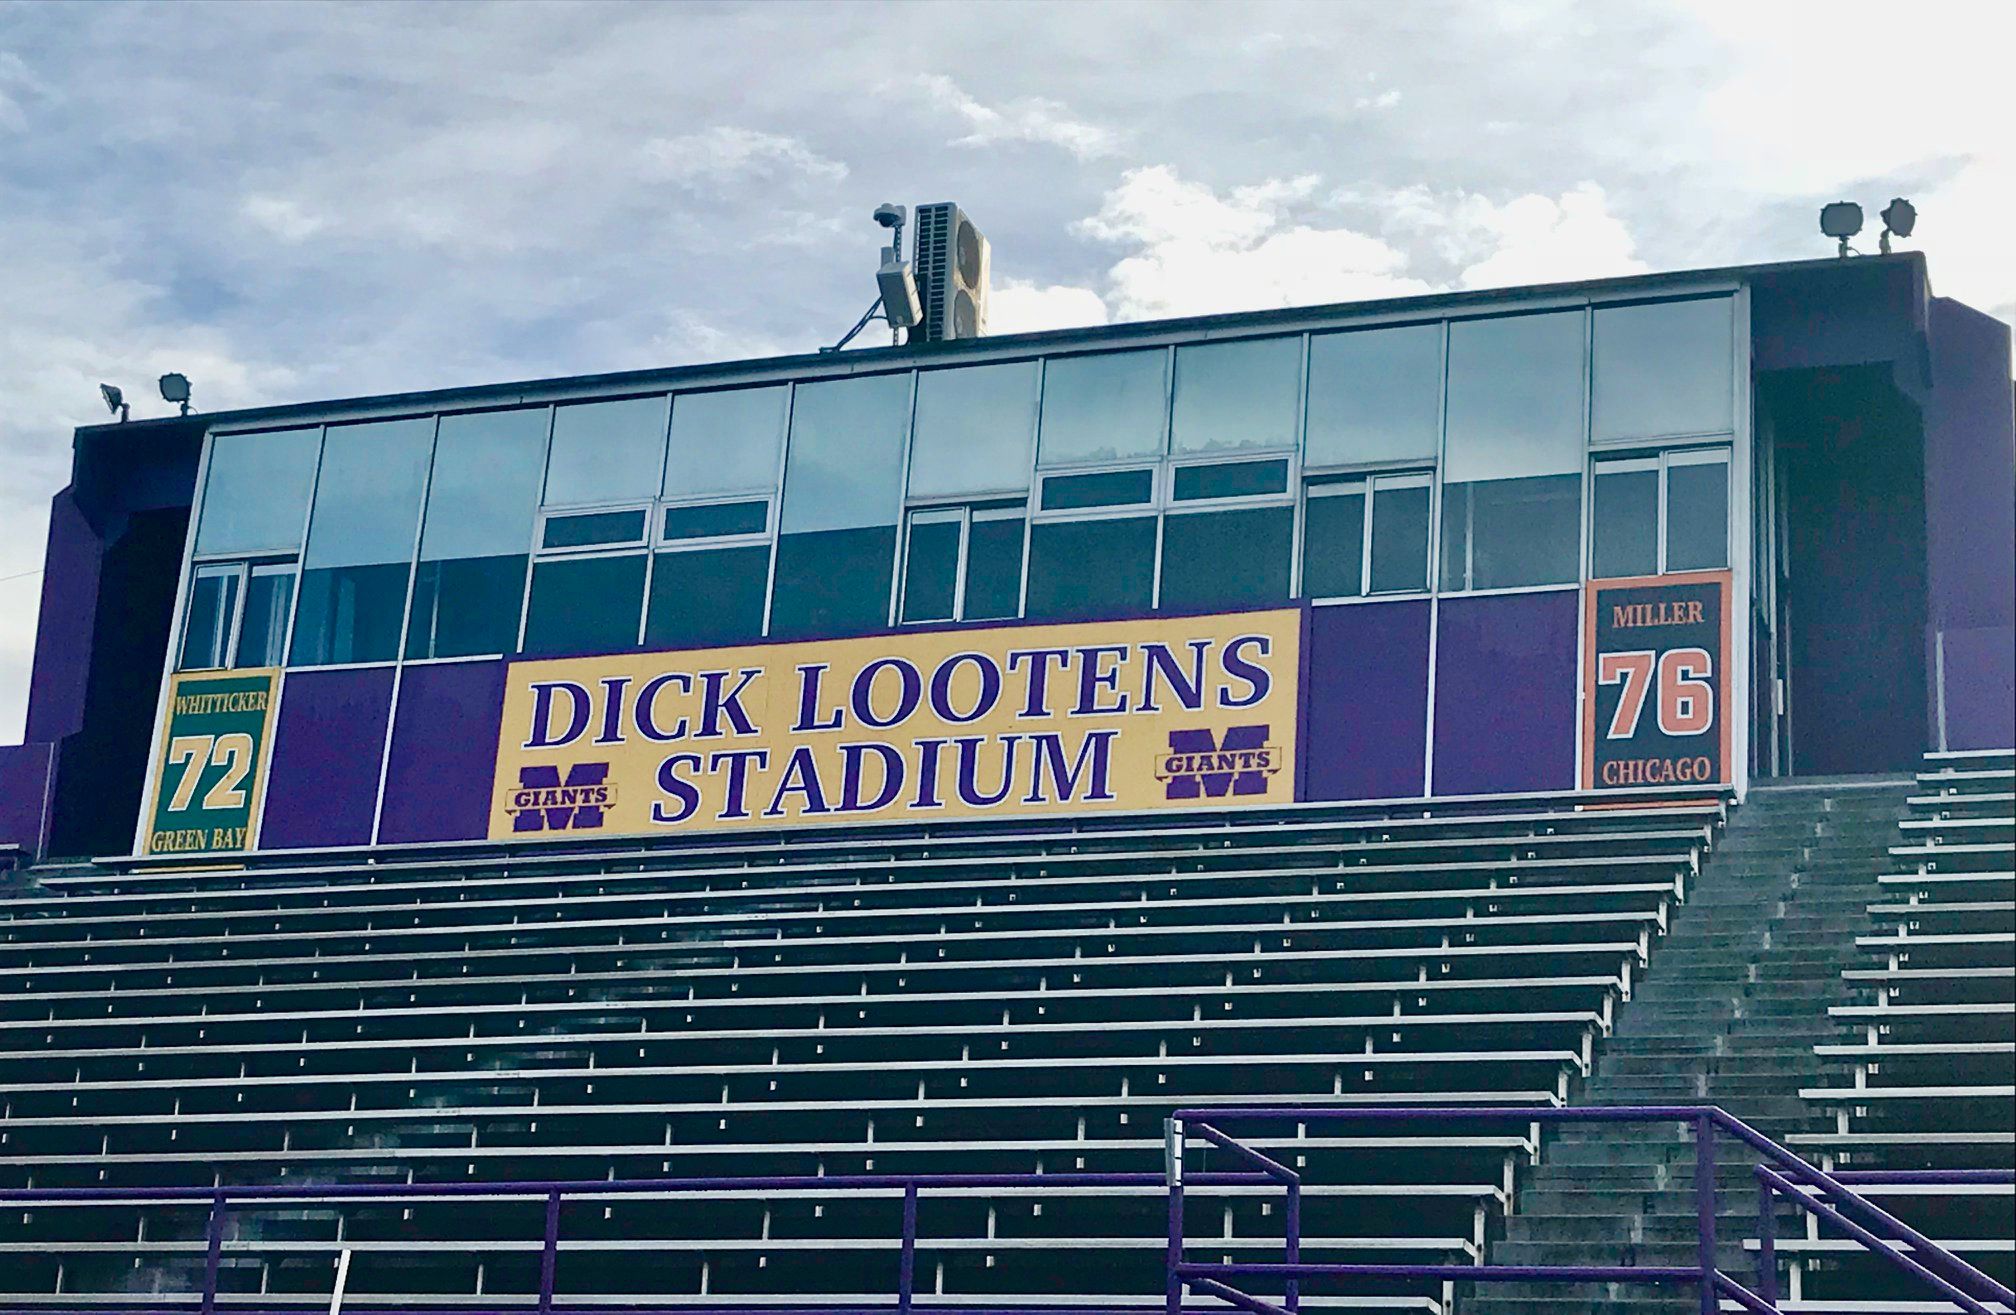 Dick Lootens Stadium - new signs on the press box